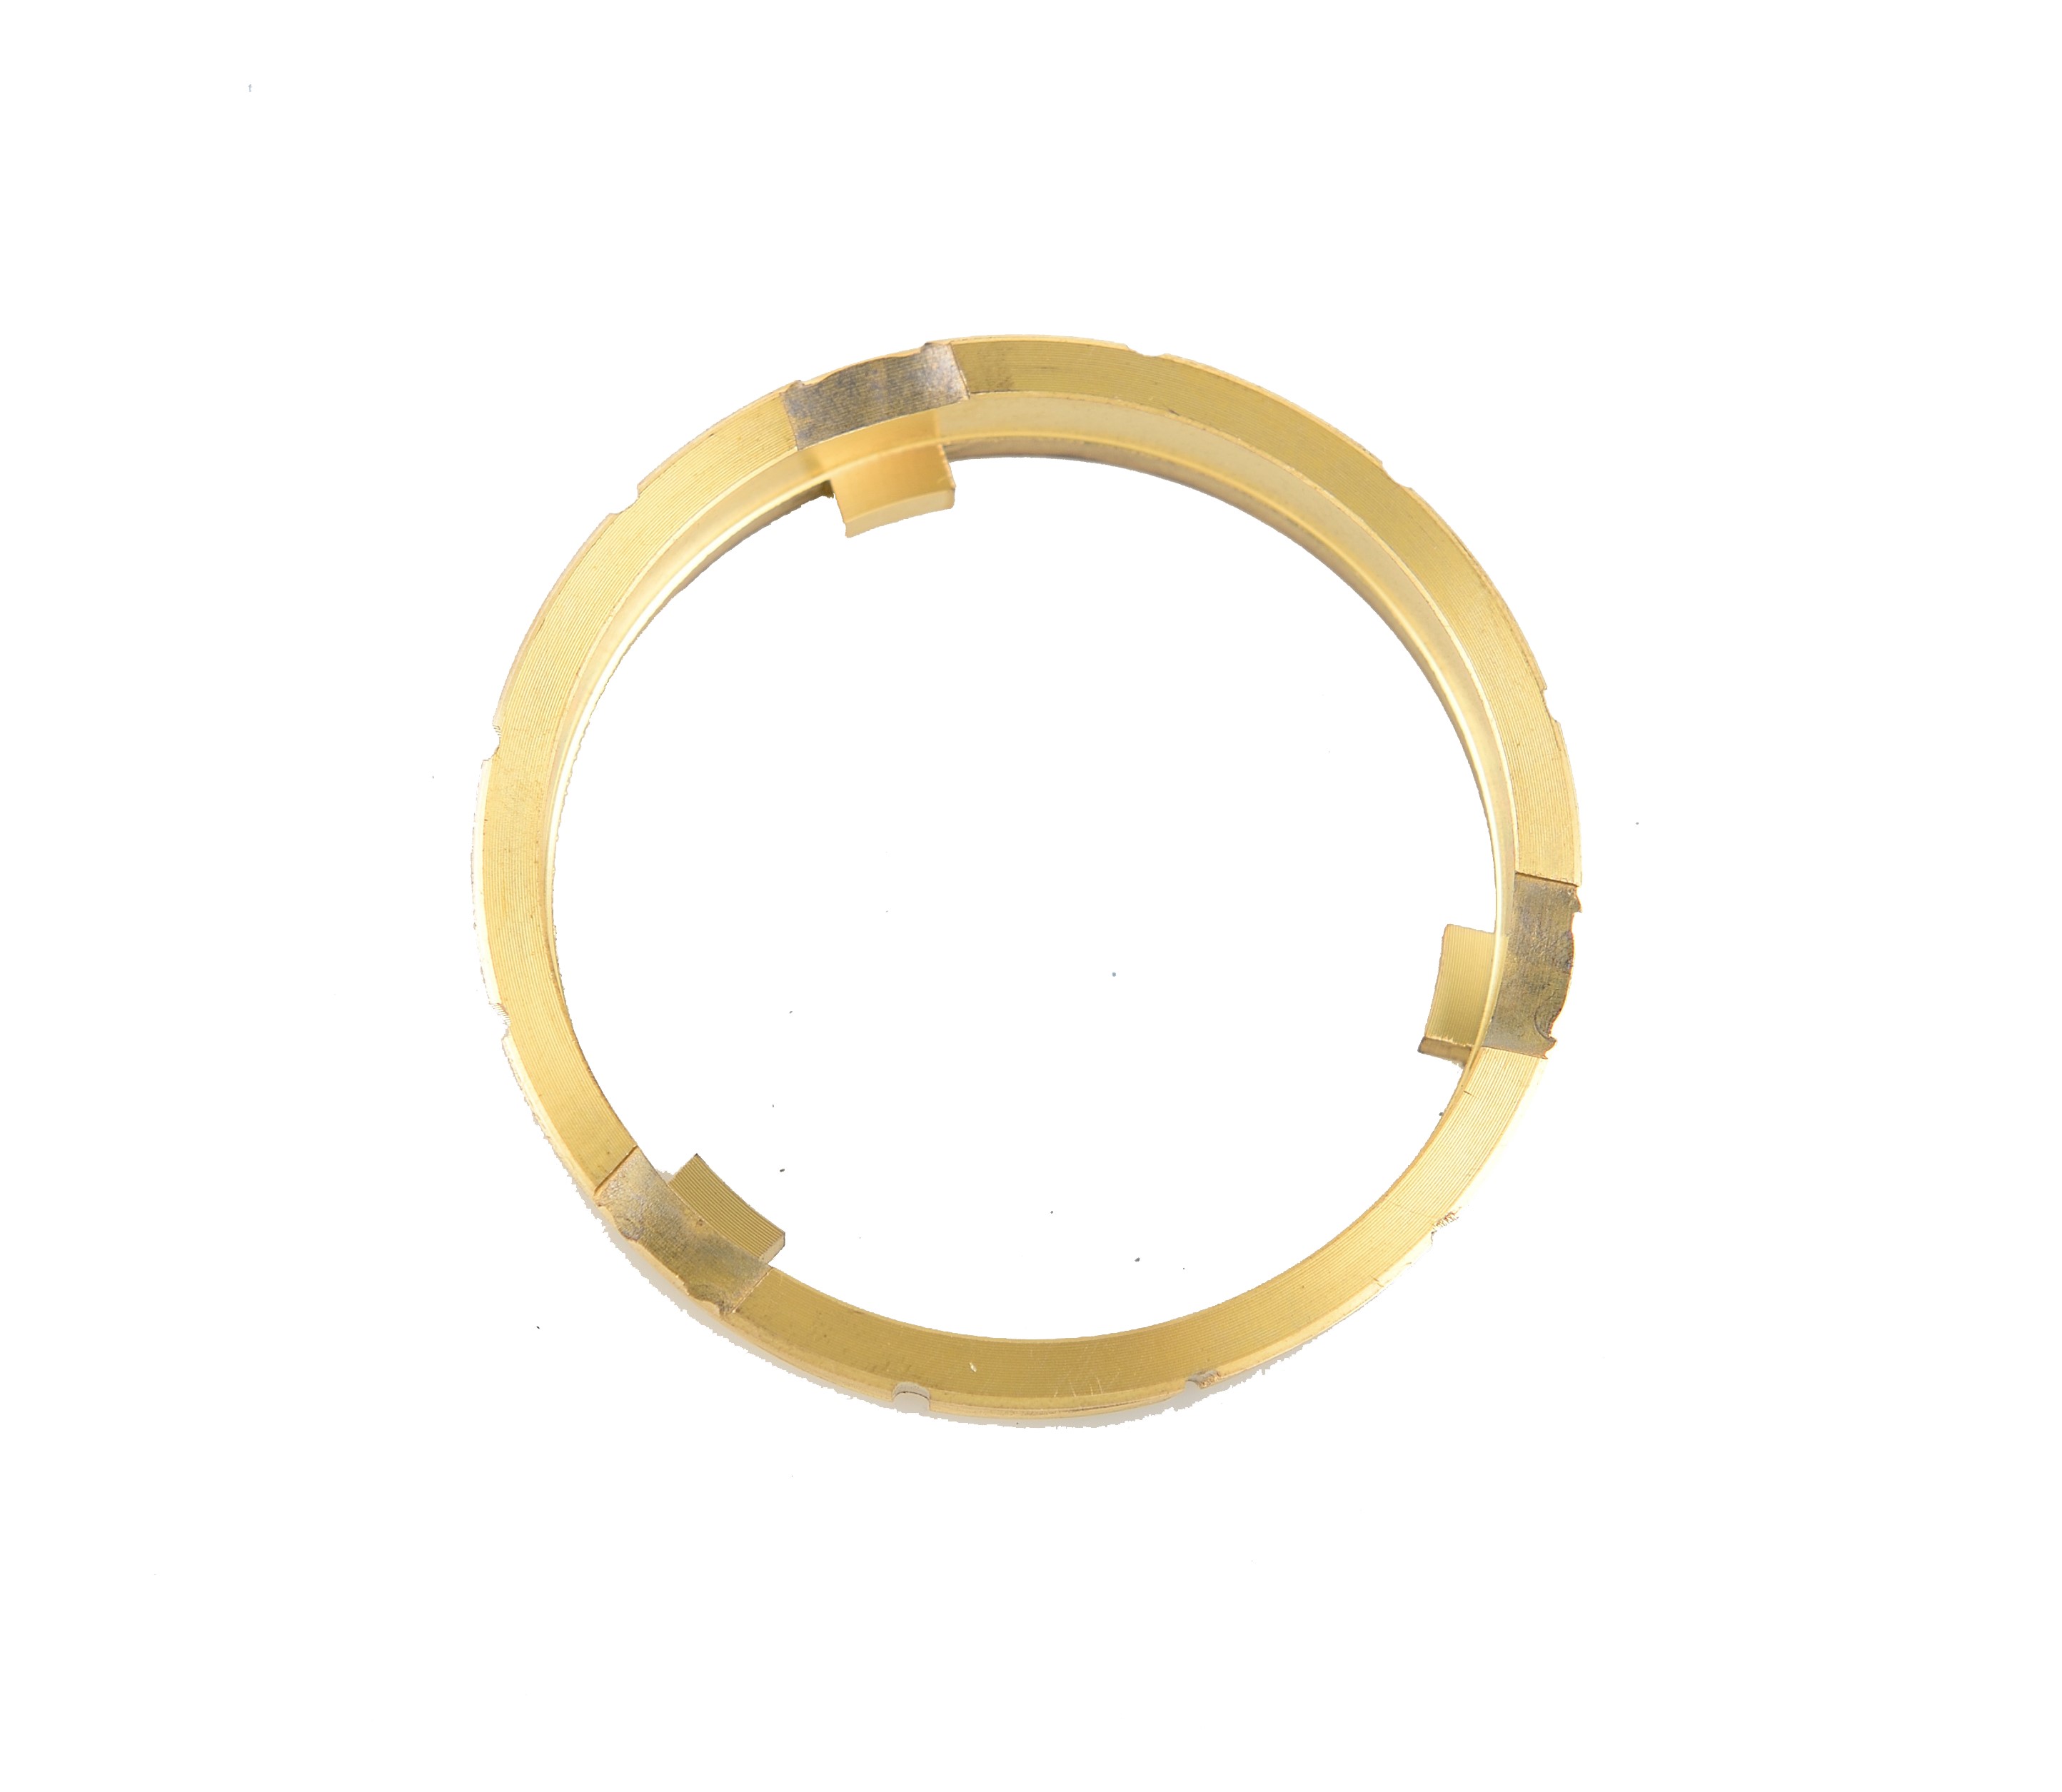 Thread in the Brass Sychronizer Ring